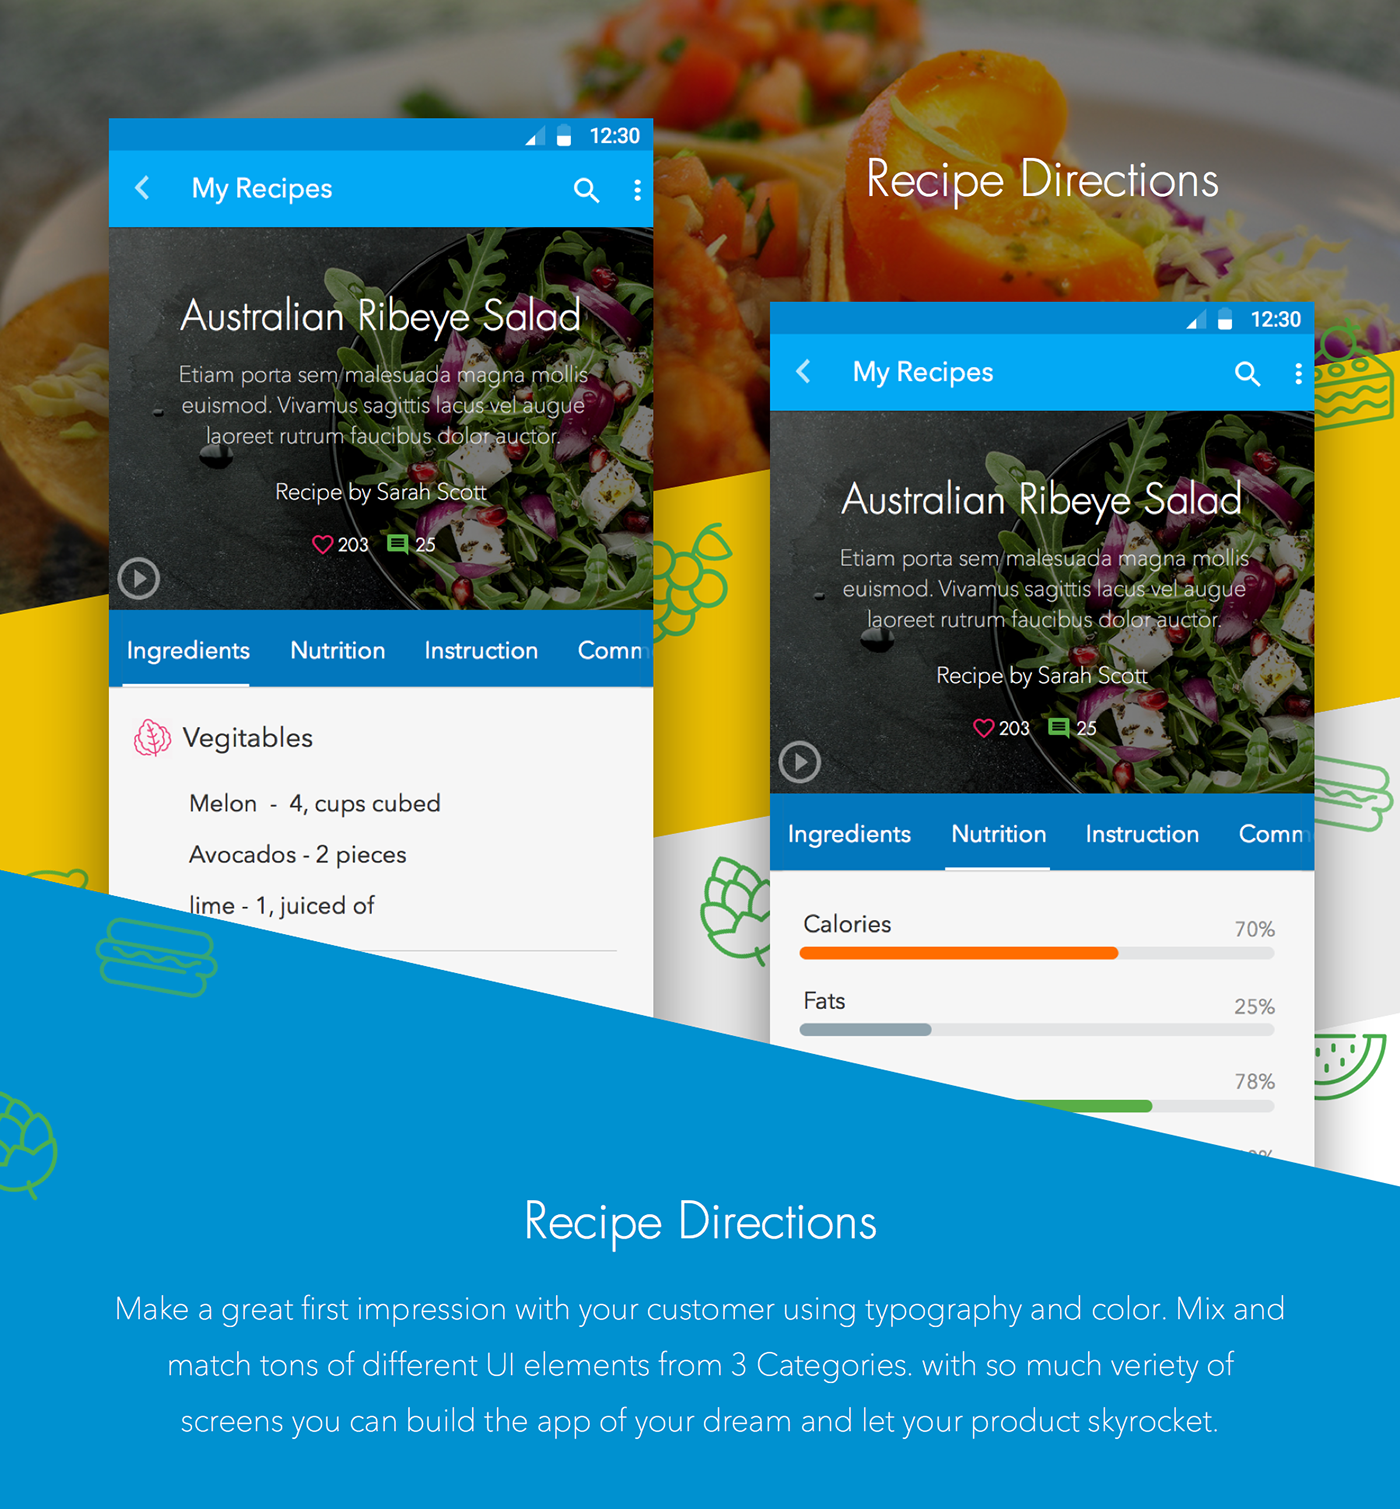 restaurants application Mobile Recipe Application Mobile Application free ui kit material design application food delivery app Android App mobile Mobile Restaurants